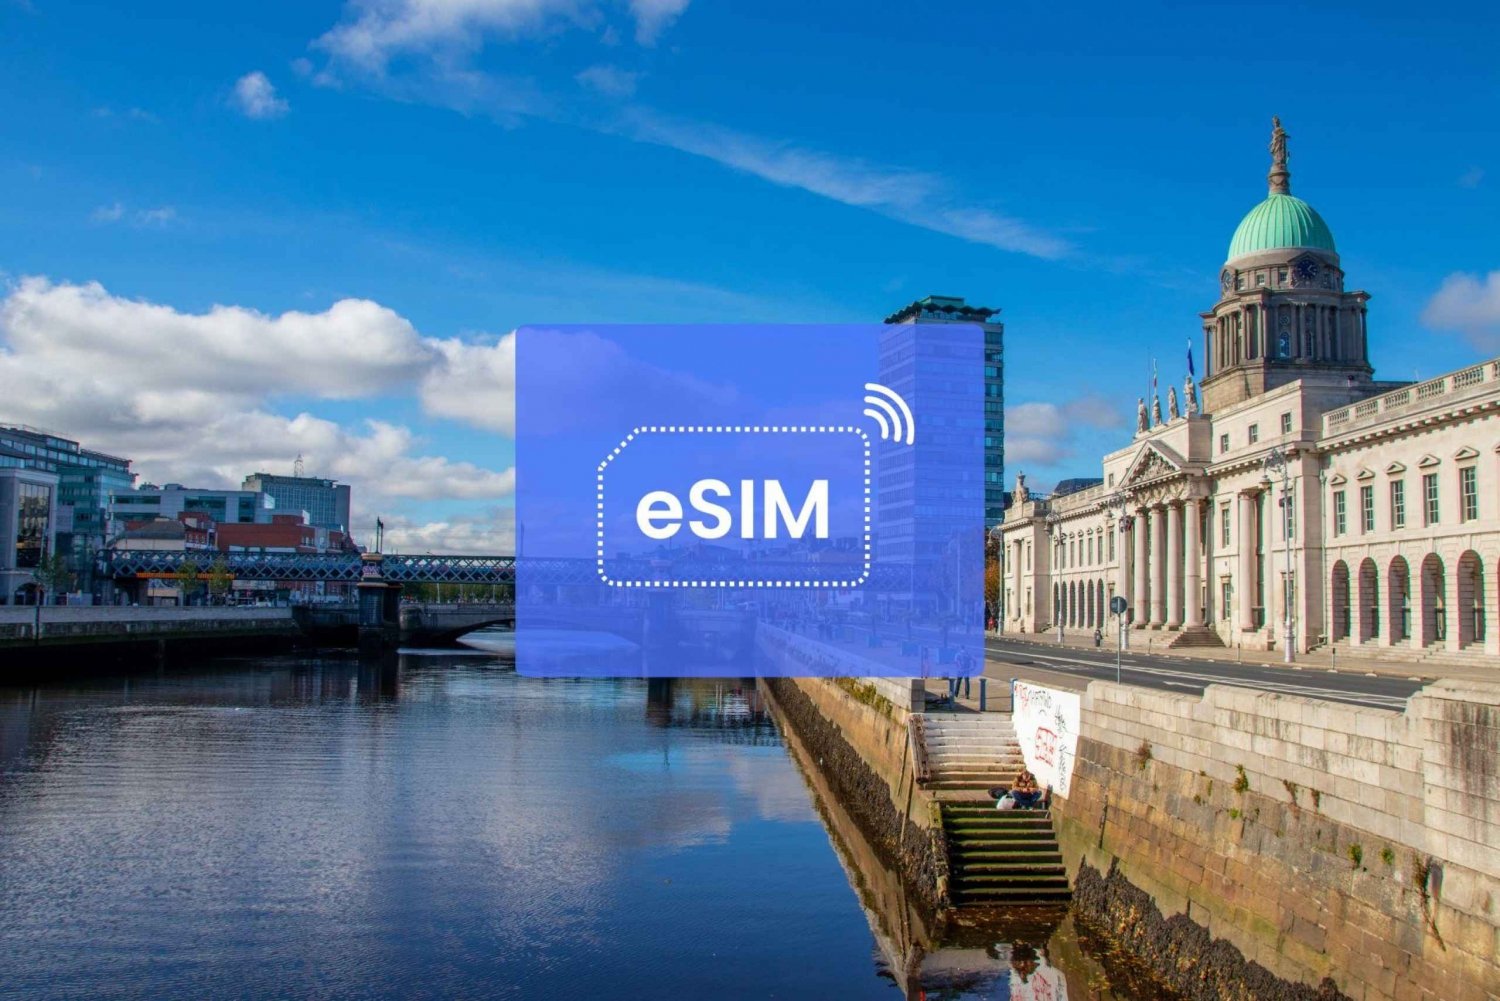 Dublín: Irlanda/ Europa eSIM Roaming Plan de Datos Móviles